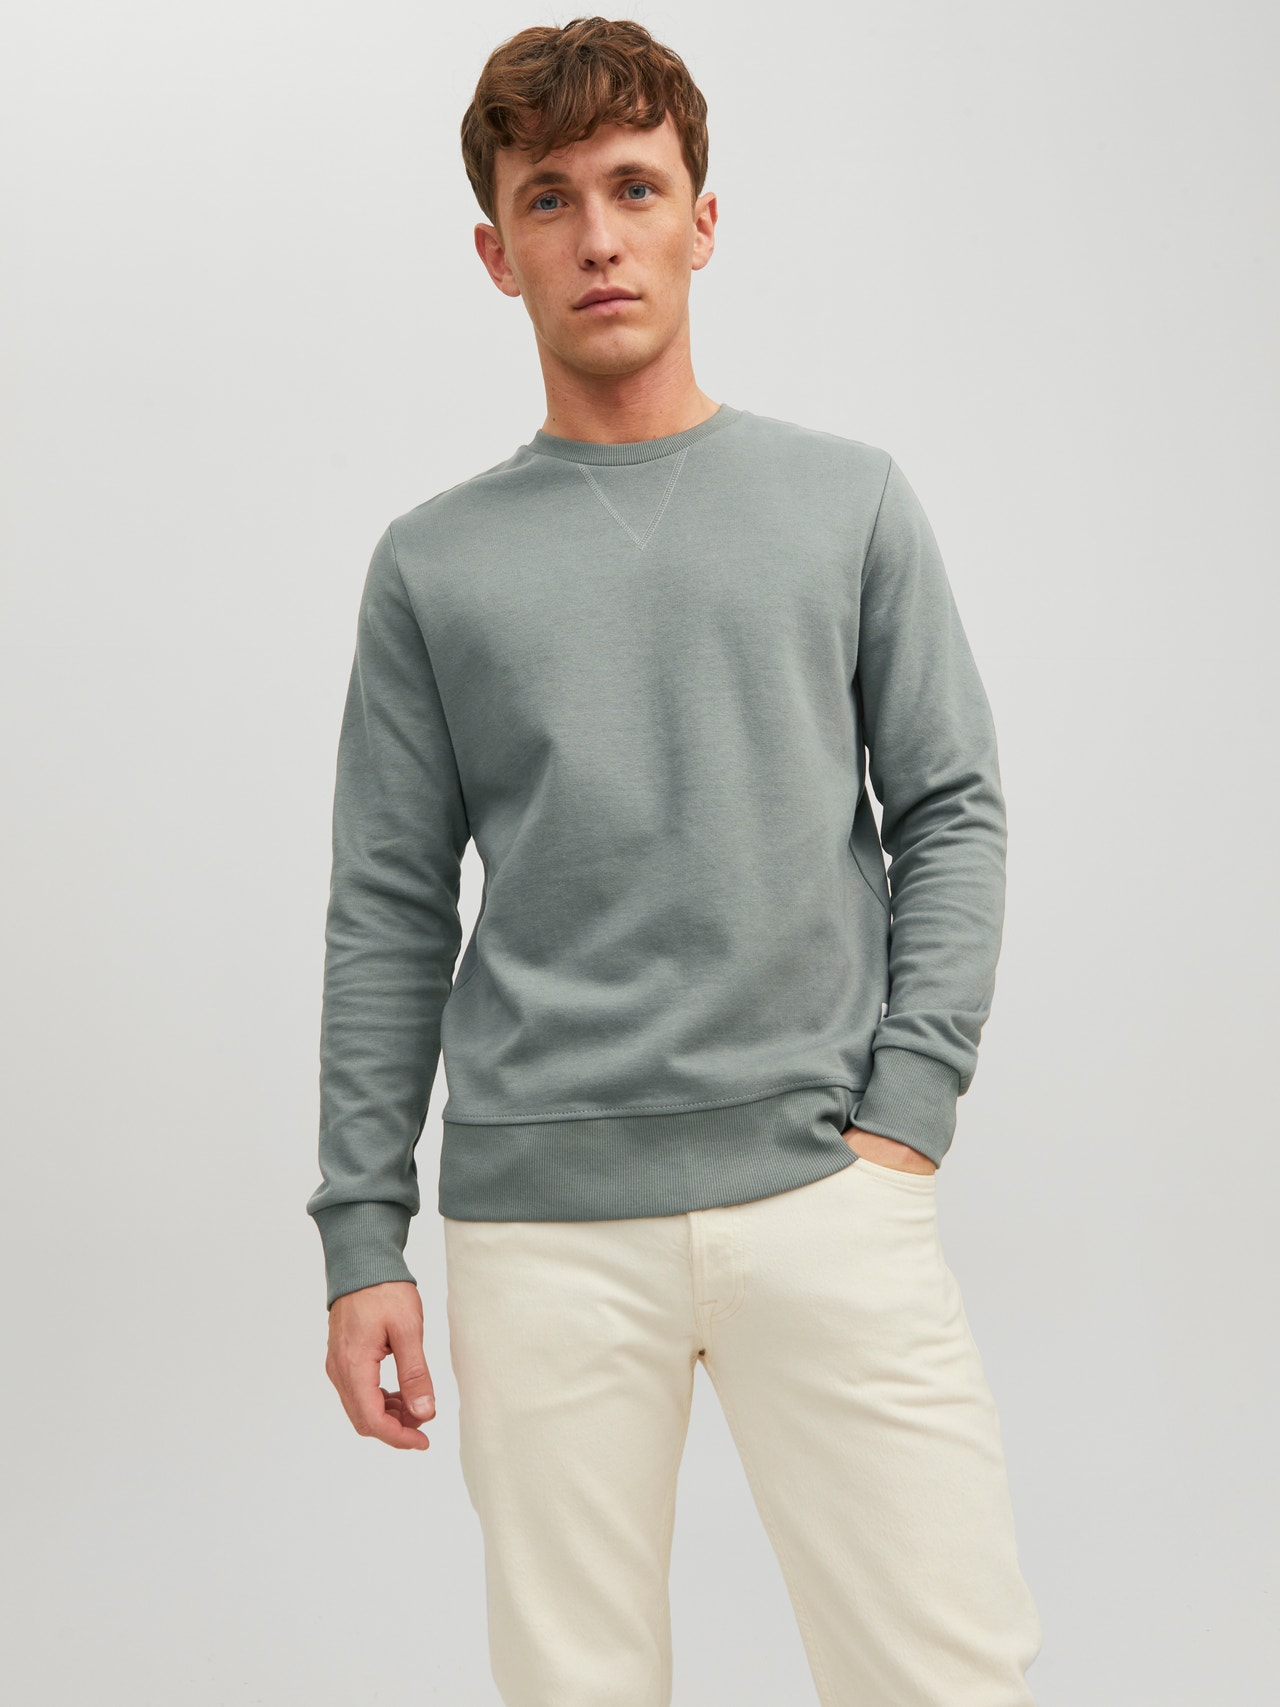 Plain Crewn Neck Sweatshirt, Dark Grey